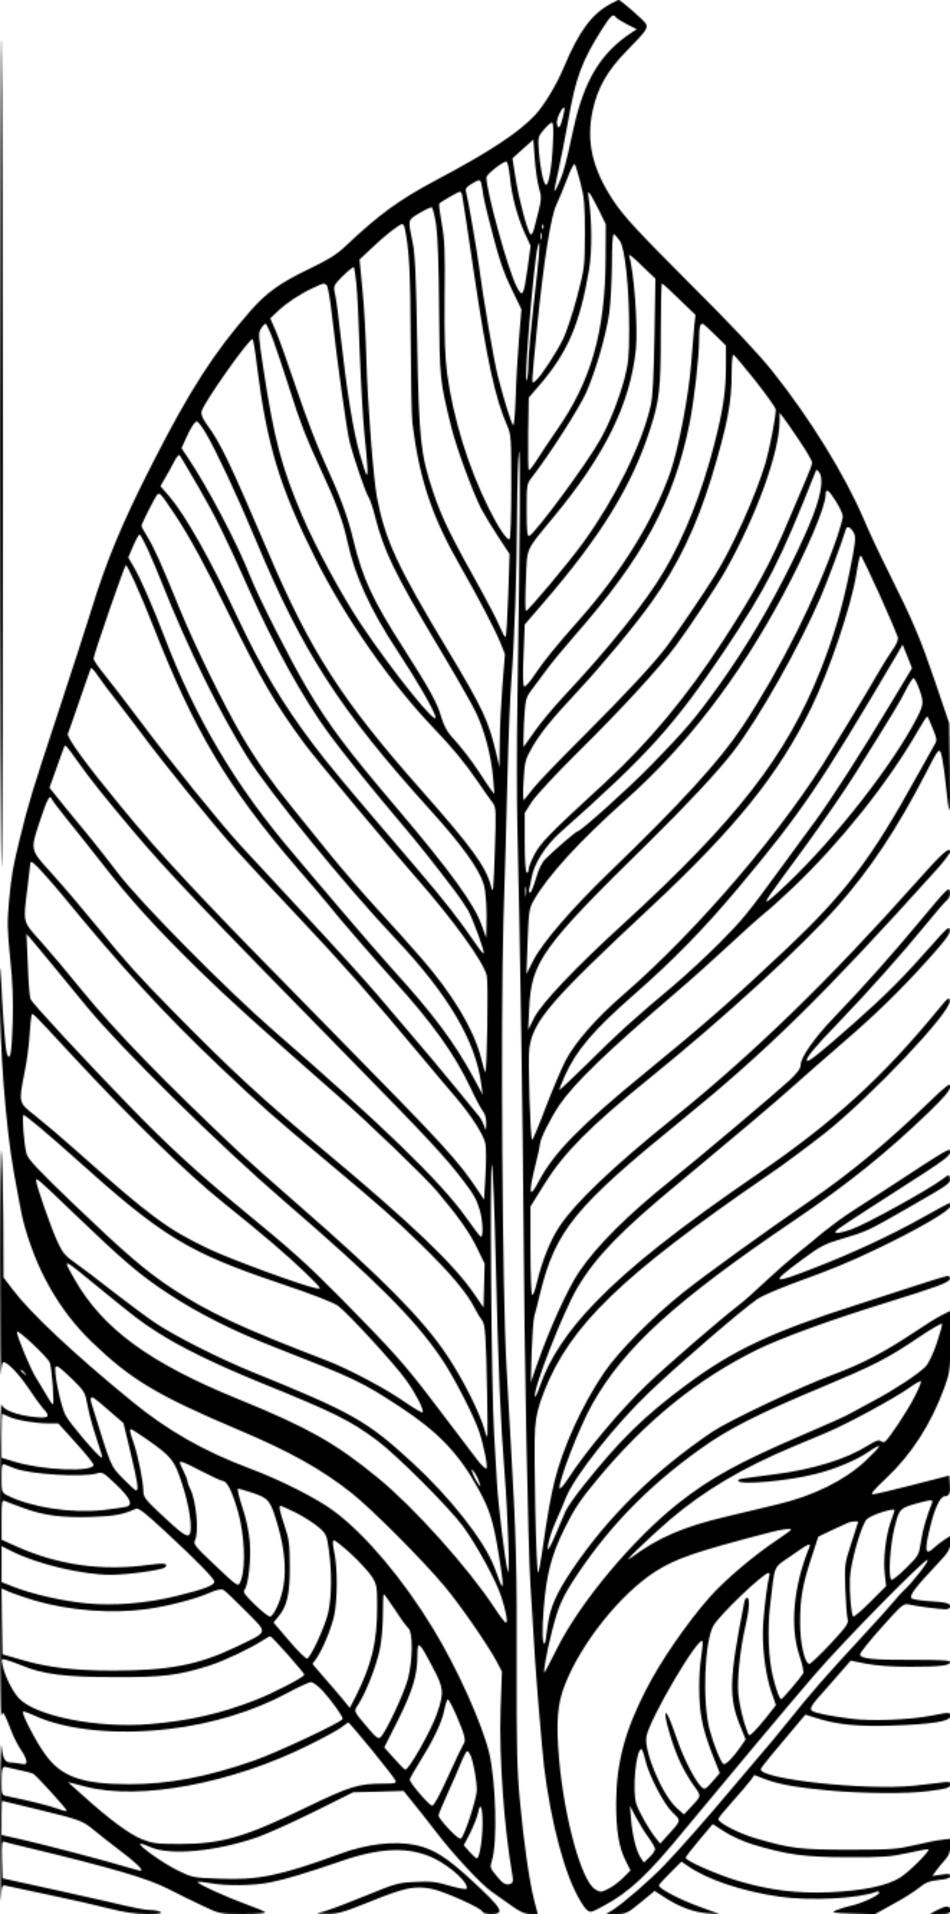 Coloring book Leaf pattern (Vertical)